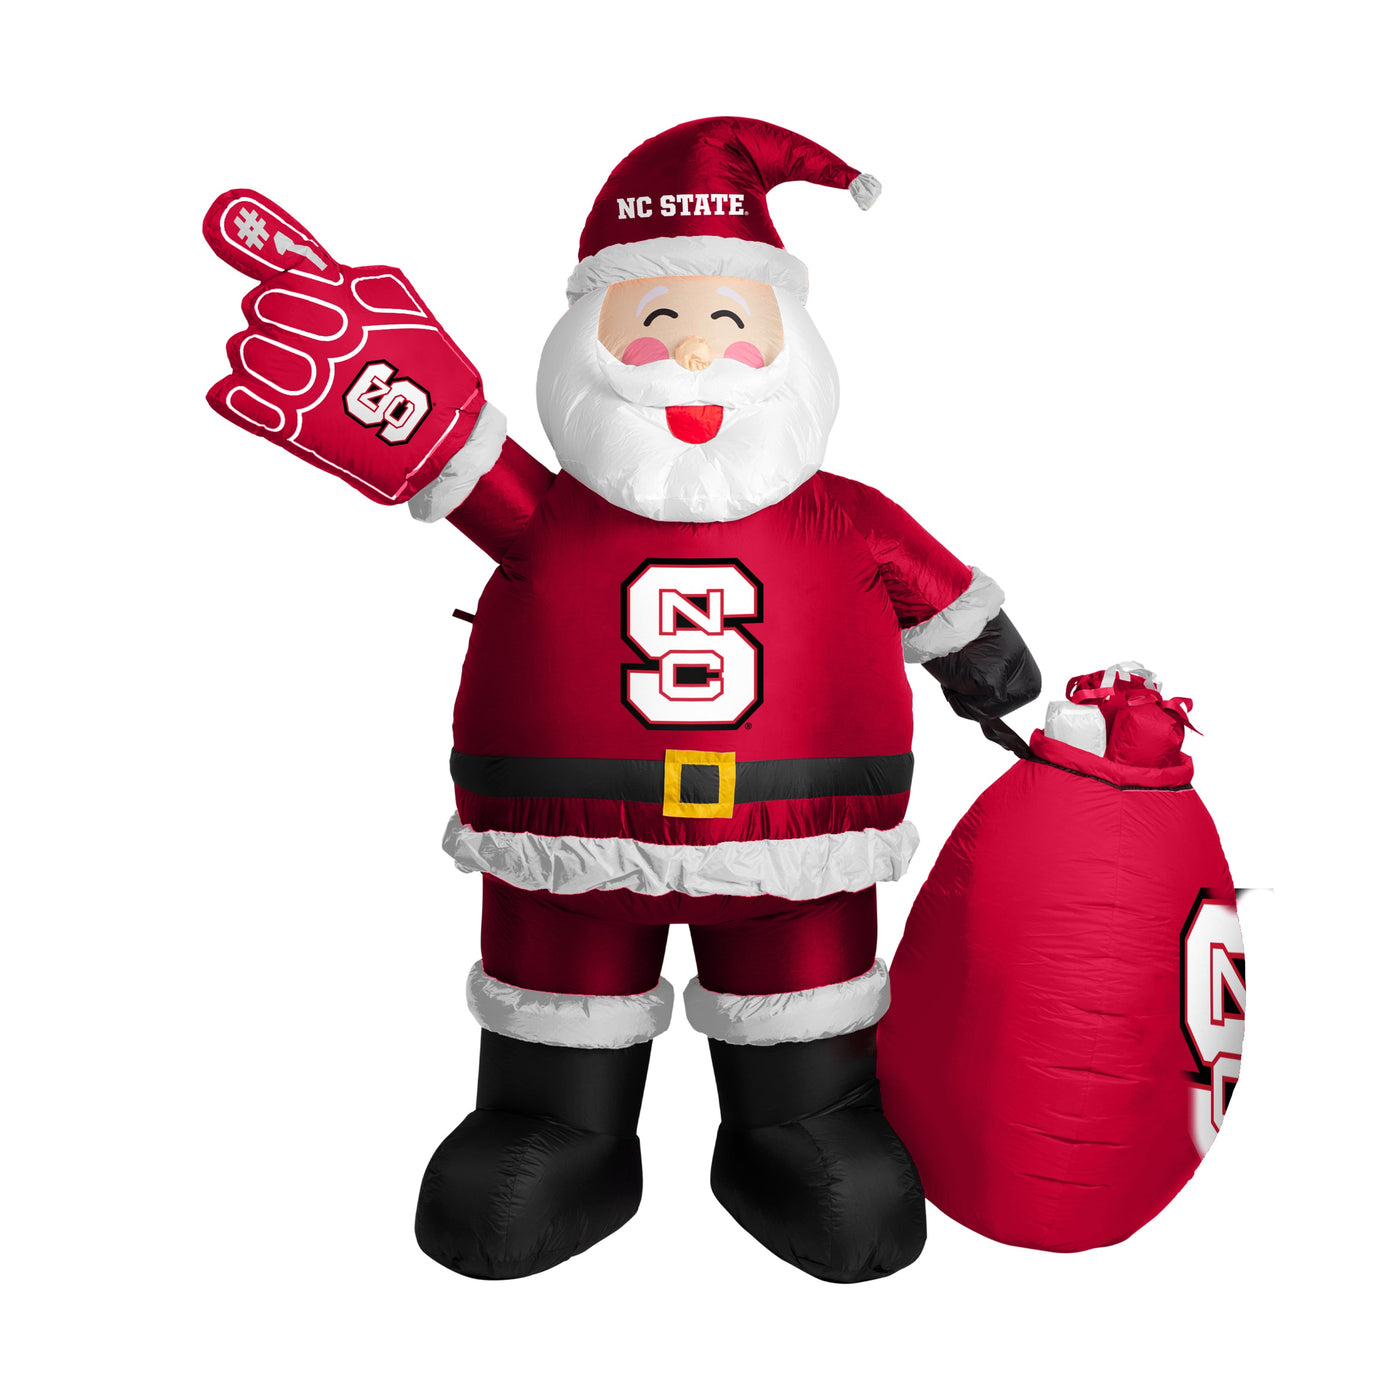 NC State Santa Claus Yard Inflatable